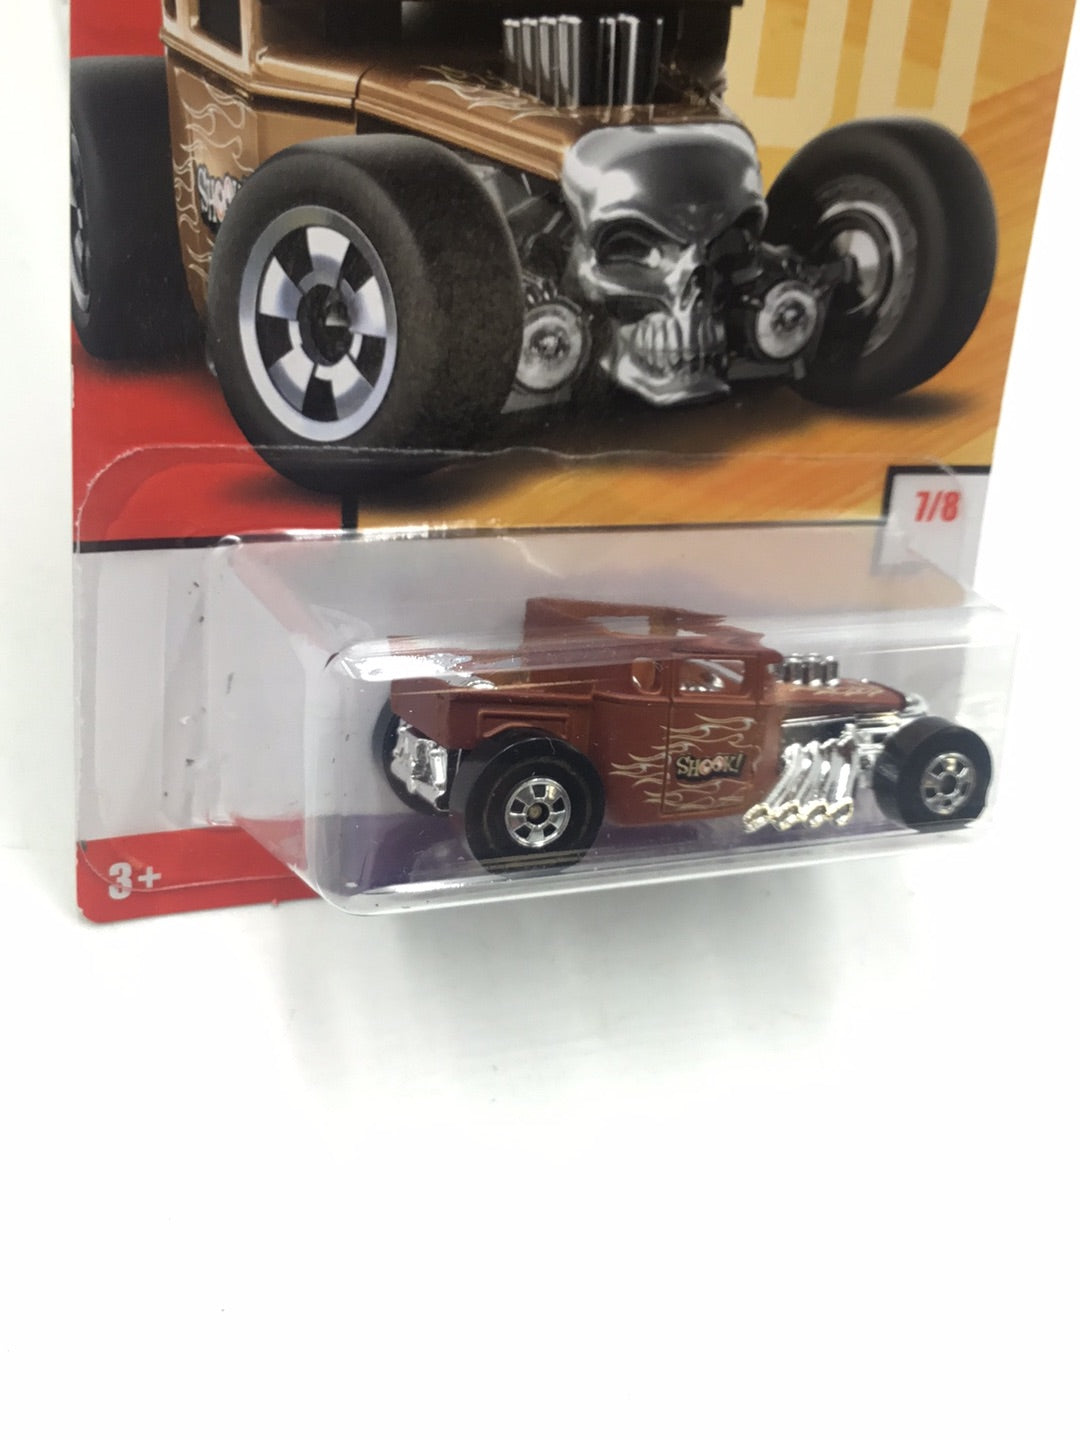 Hot wheels Decades Bone Shaker #7 target exclusive AA5